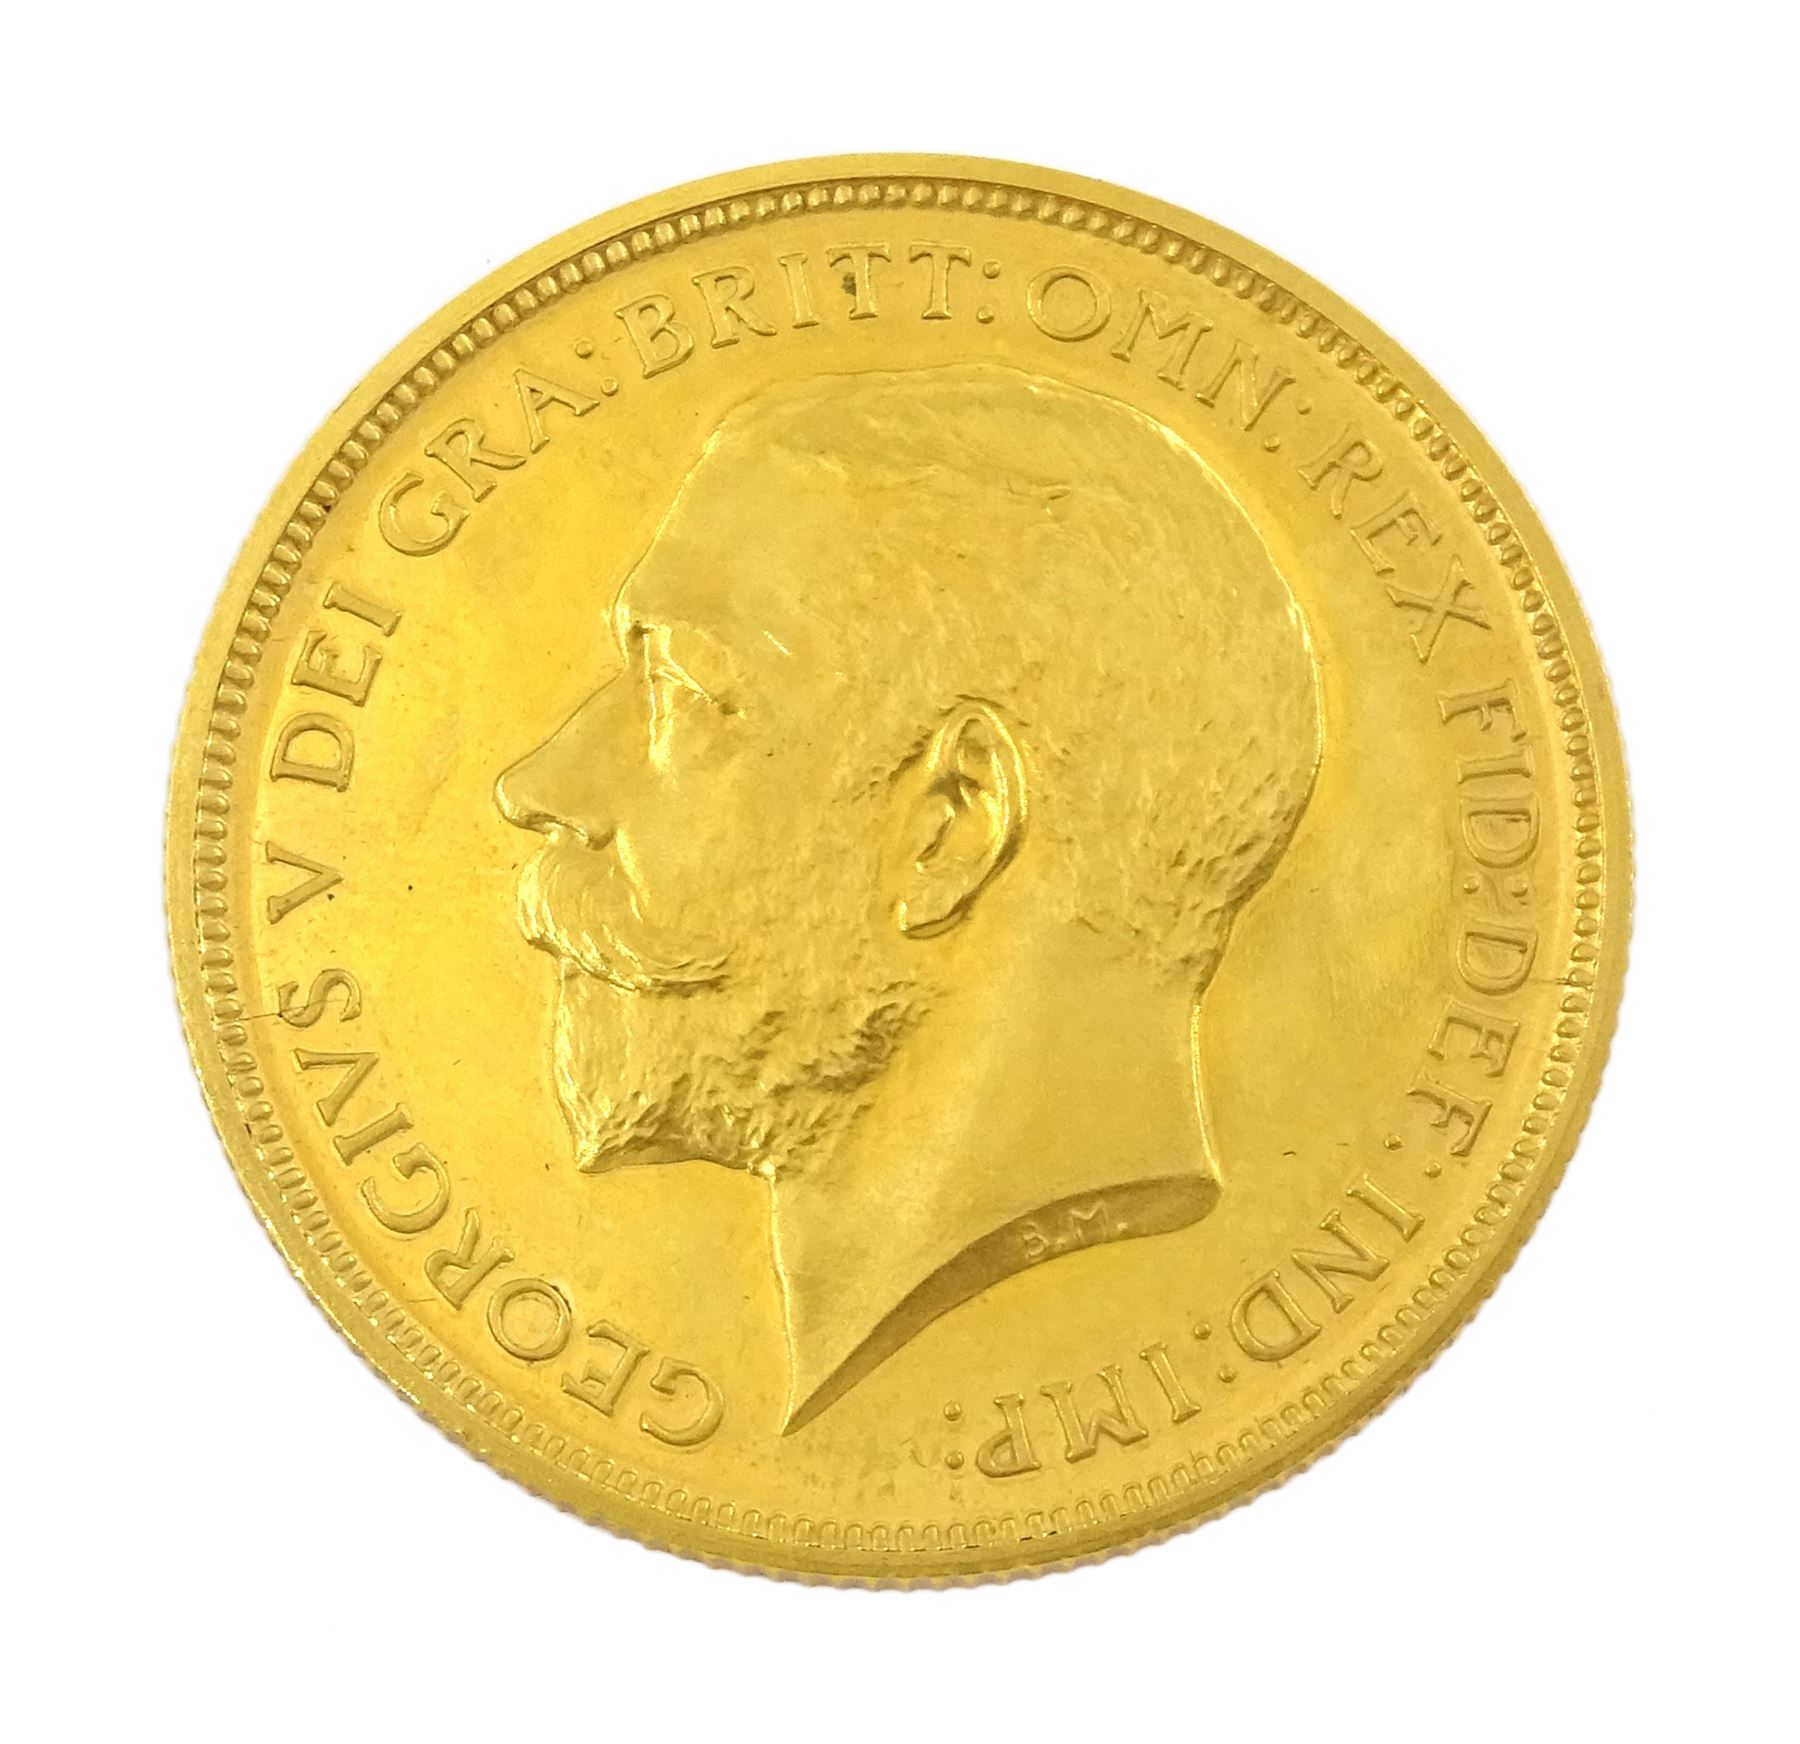 King George V 1911 proof long coin set - Image 6 of 28